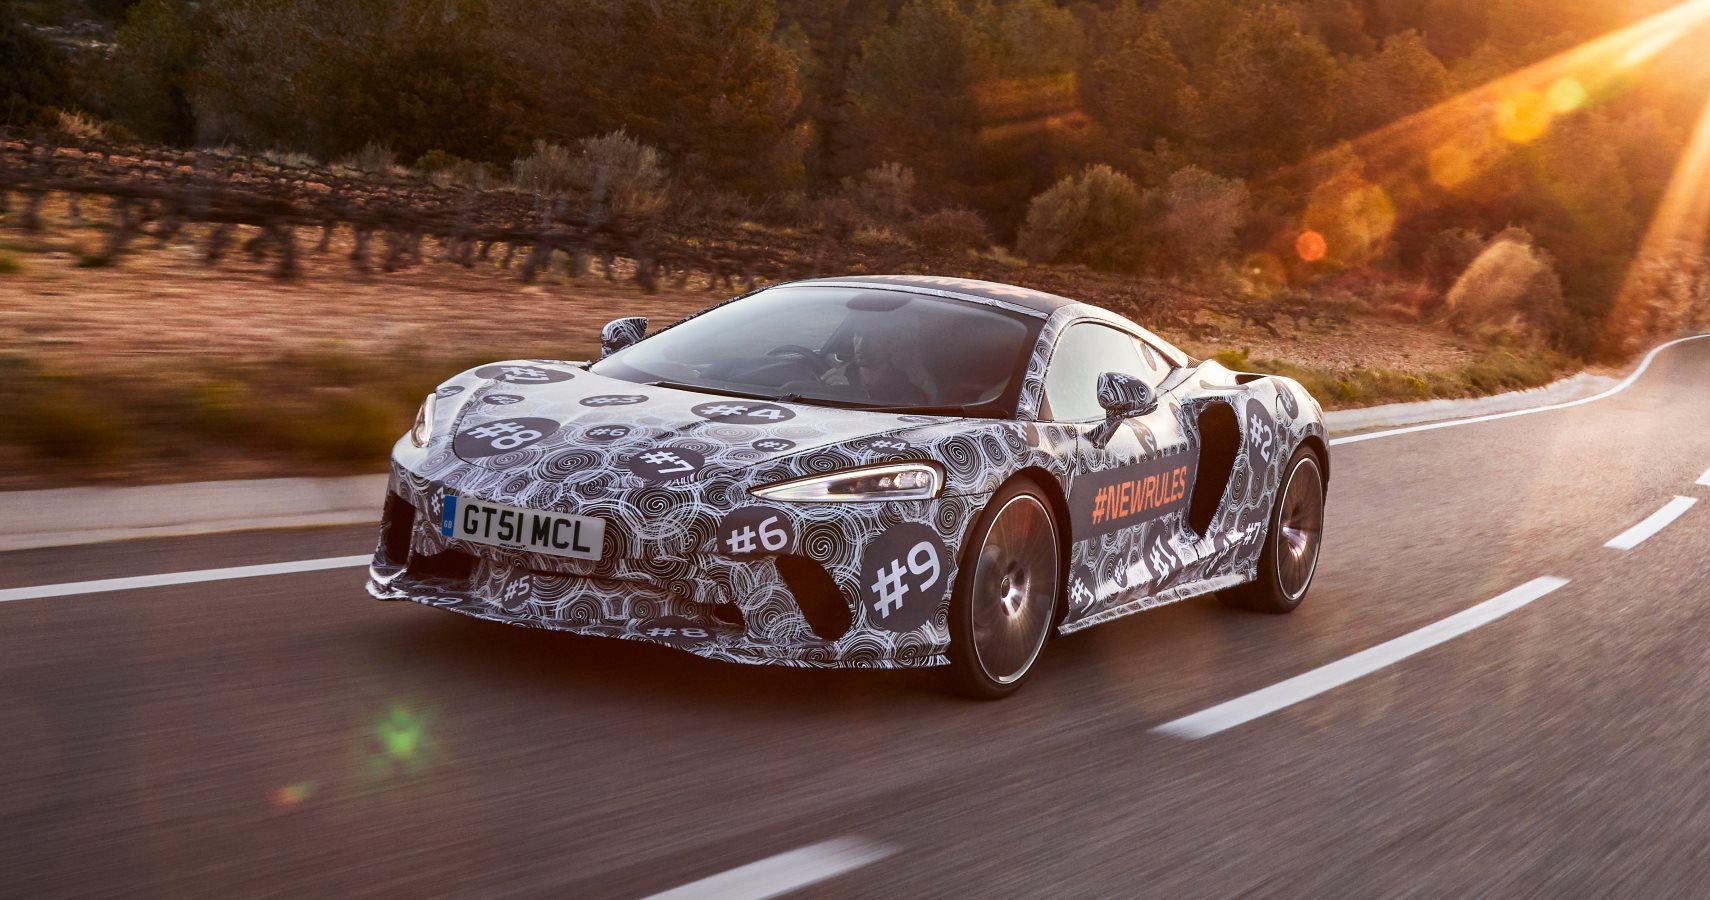 McLaren Is Teasing A New Grand Tourer Inspired By Their Upcoming Speedtail Hypercar